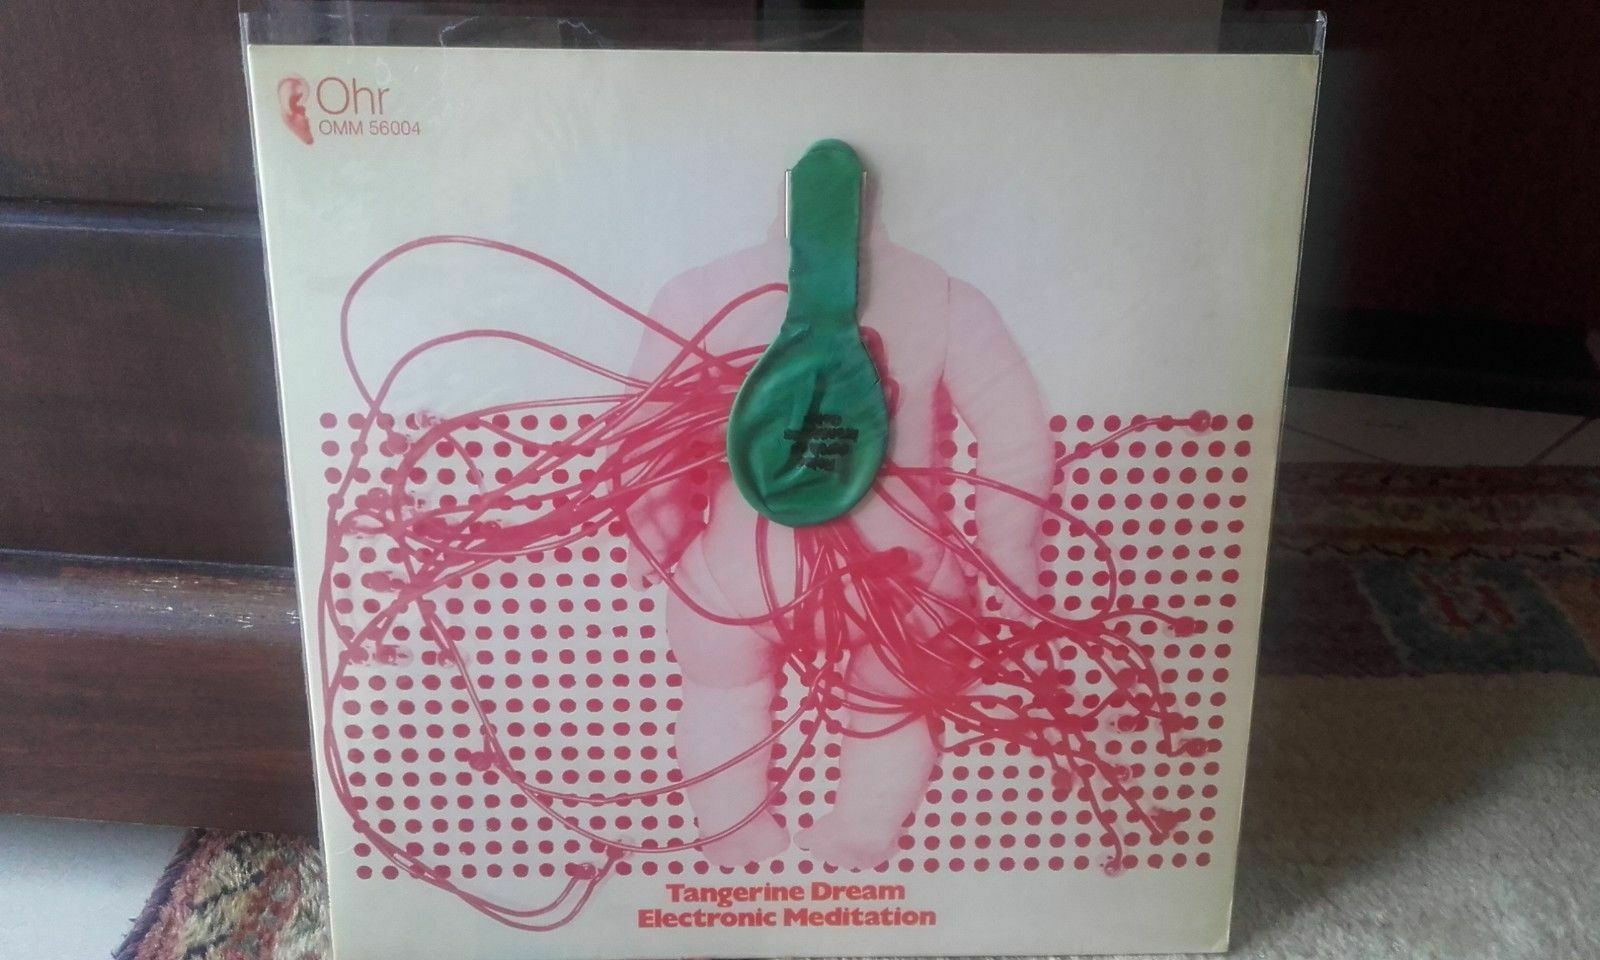 popsike.com - Tangerine Dream Electronic Meditation LP Ohr 56004